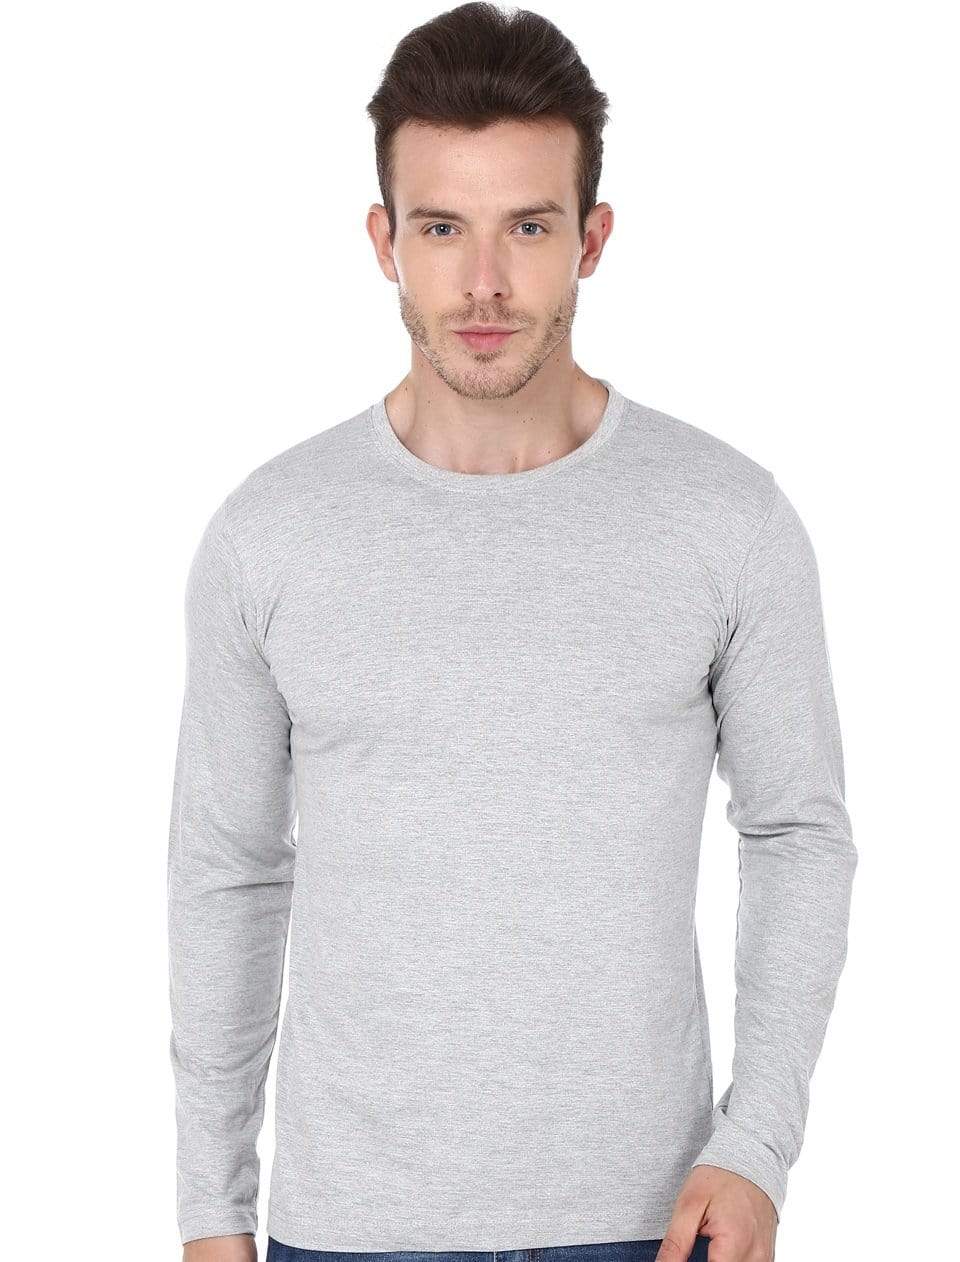 Men's Grey full sleeve t-shirt | Plain round neck - Wolfattire